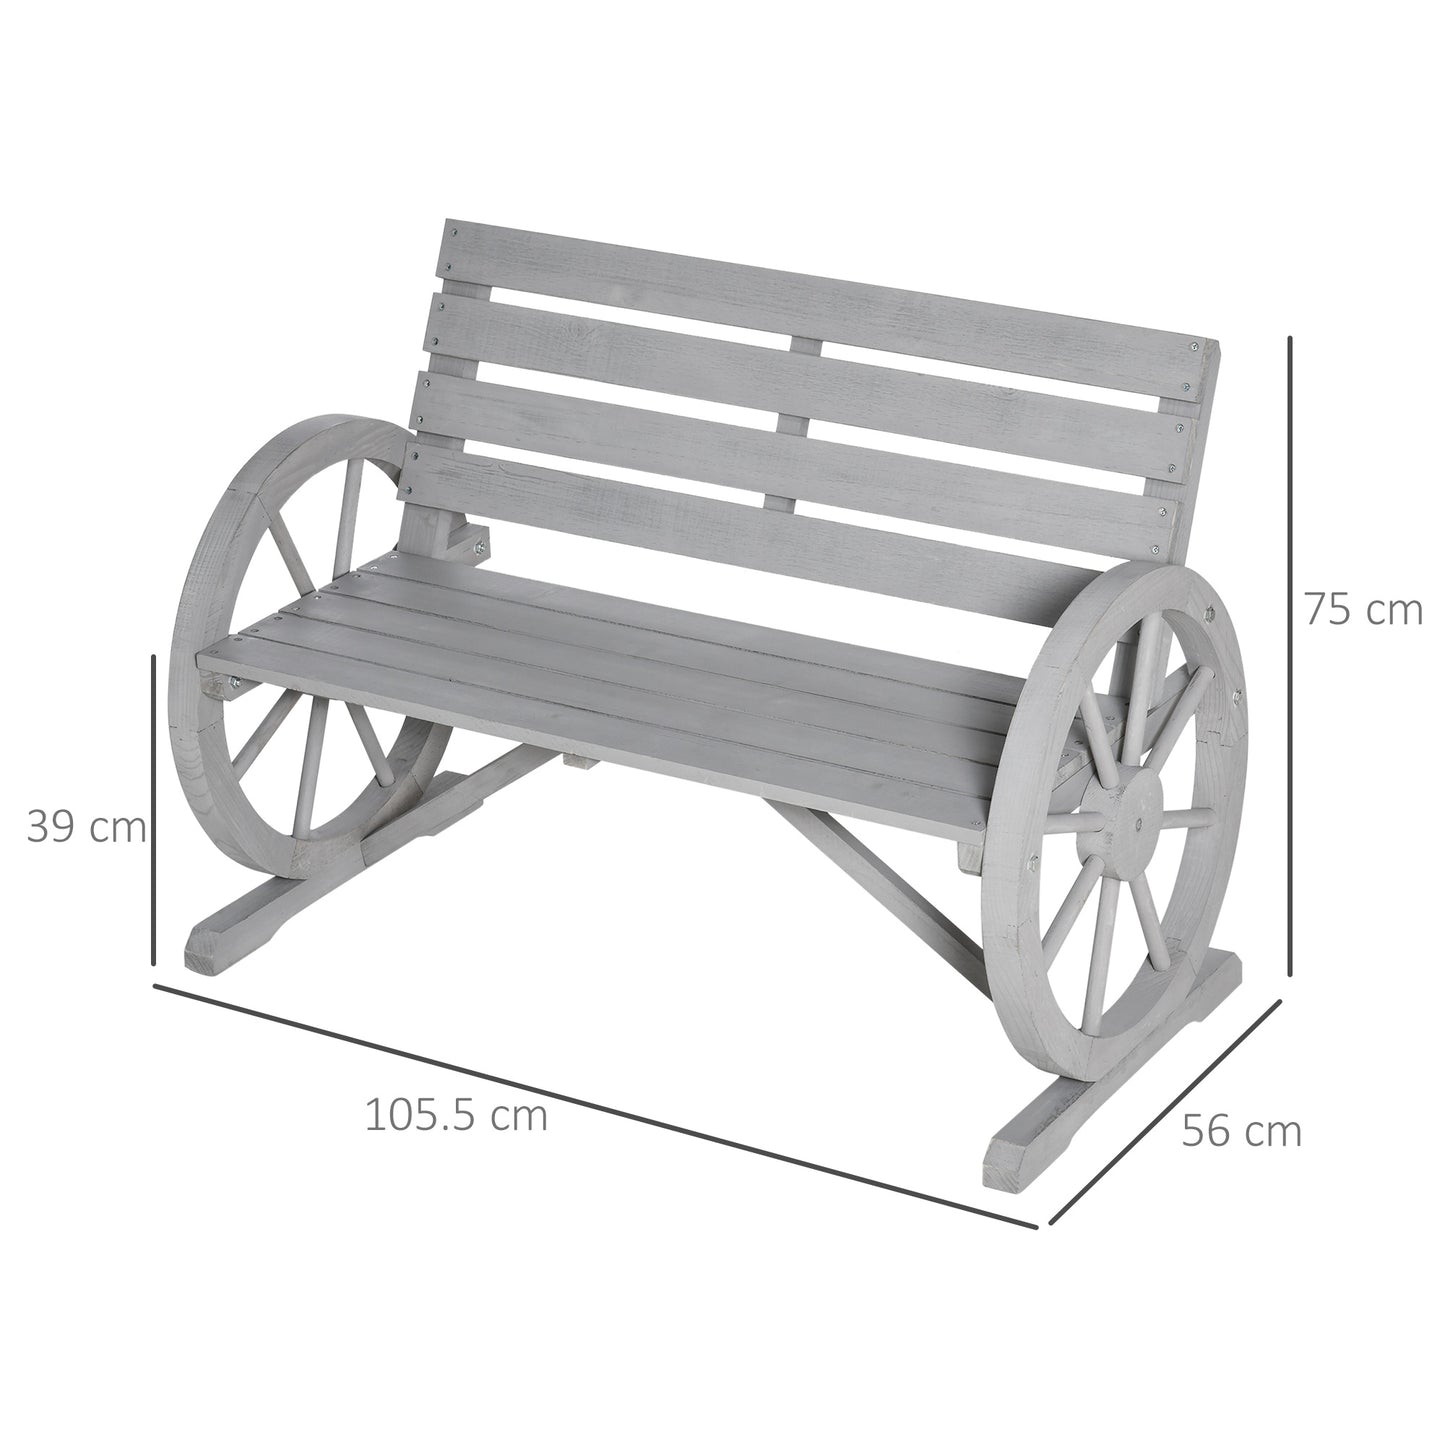 Outsunny Wooden Cart Wagon Wheel 2 Seater Garden Bench Outdoor Garden Armrest Chair Rustic High Back Loveseat Grey